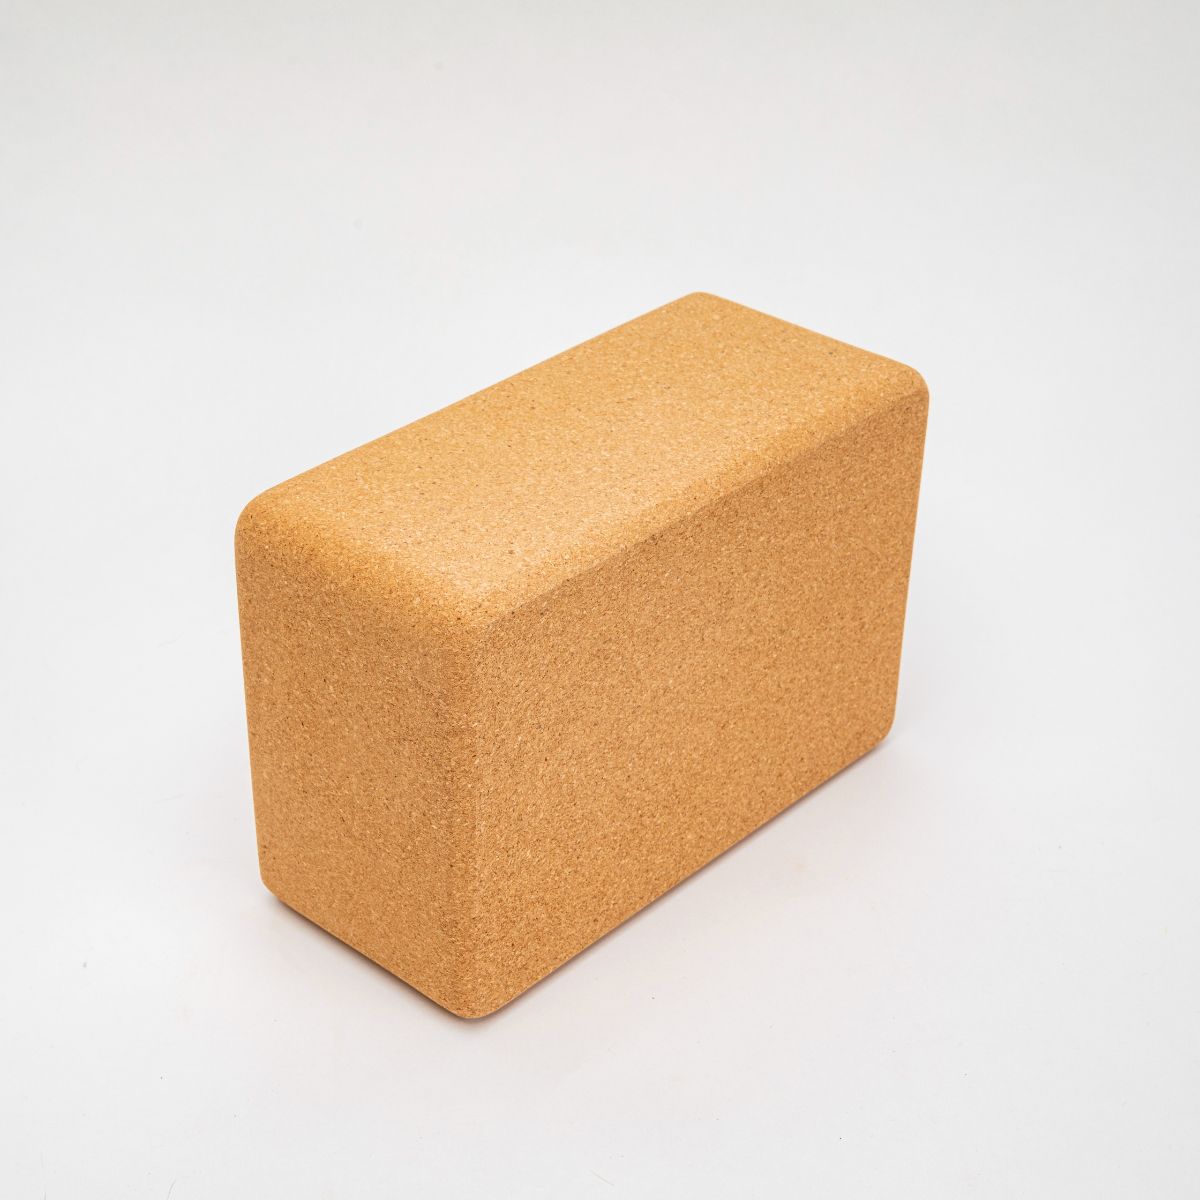 Yoga block cork - MEDIUM